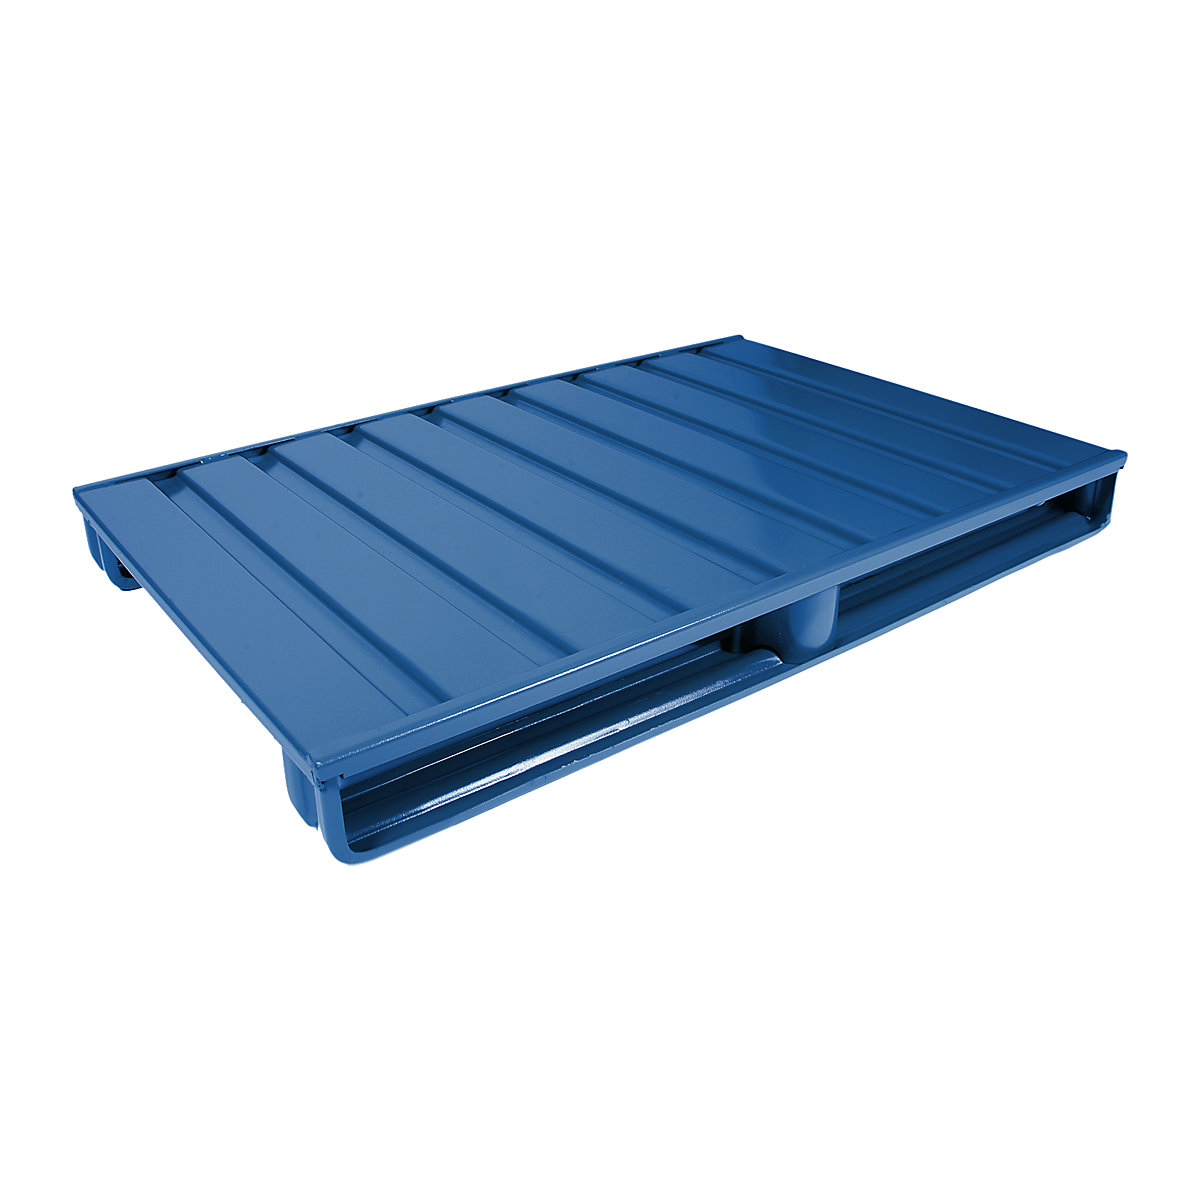 Čelična ravna paleta – Heson, DxŠ 1000 x 800 mm, nosivost 2000 kg, u encijan plavoj boji, od 10 kom.-3